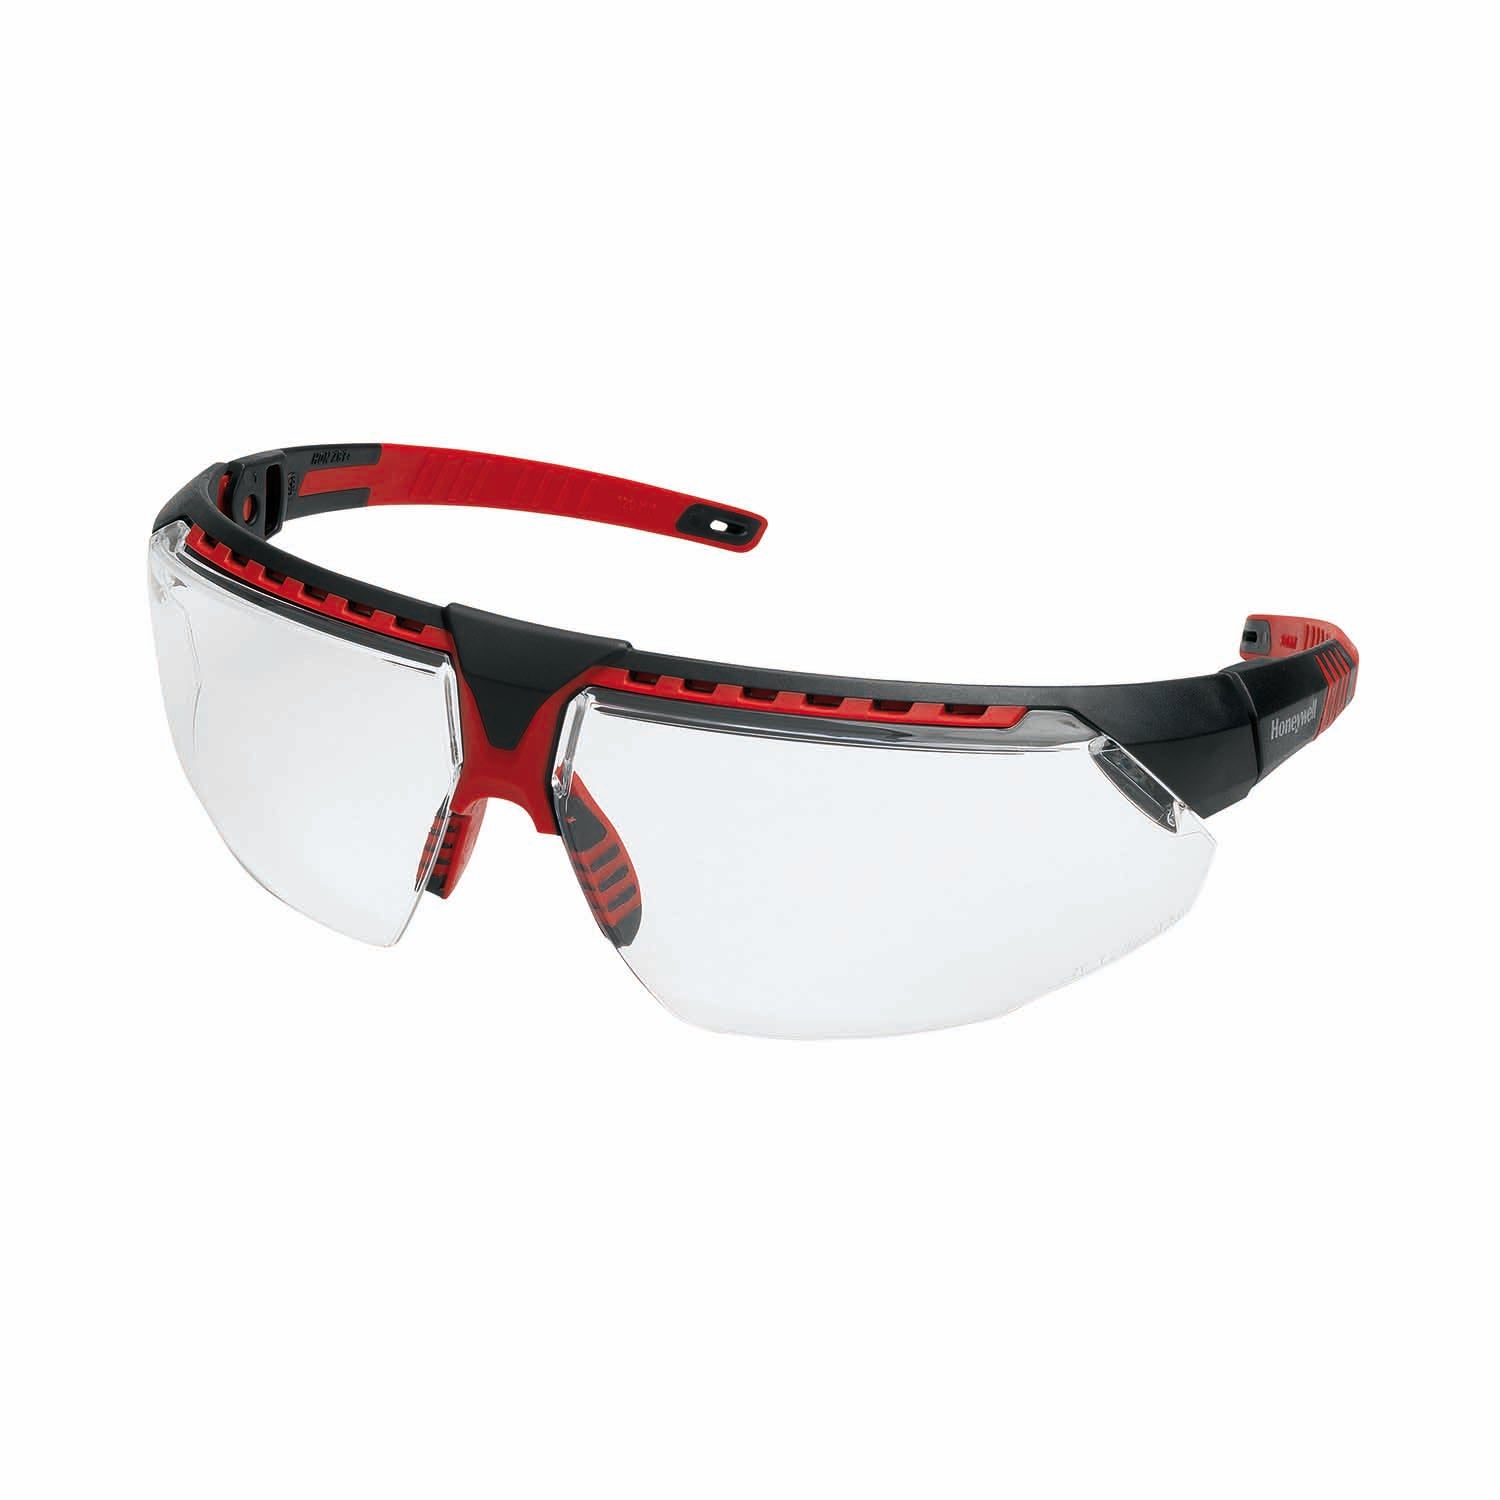 Safety glasses Honeywell avatar black red frame clear lens